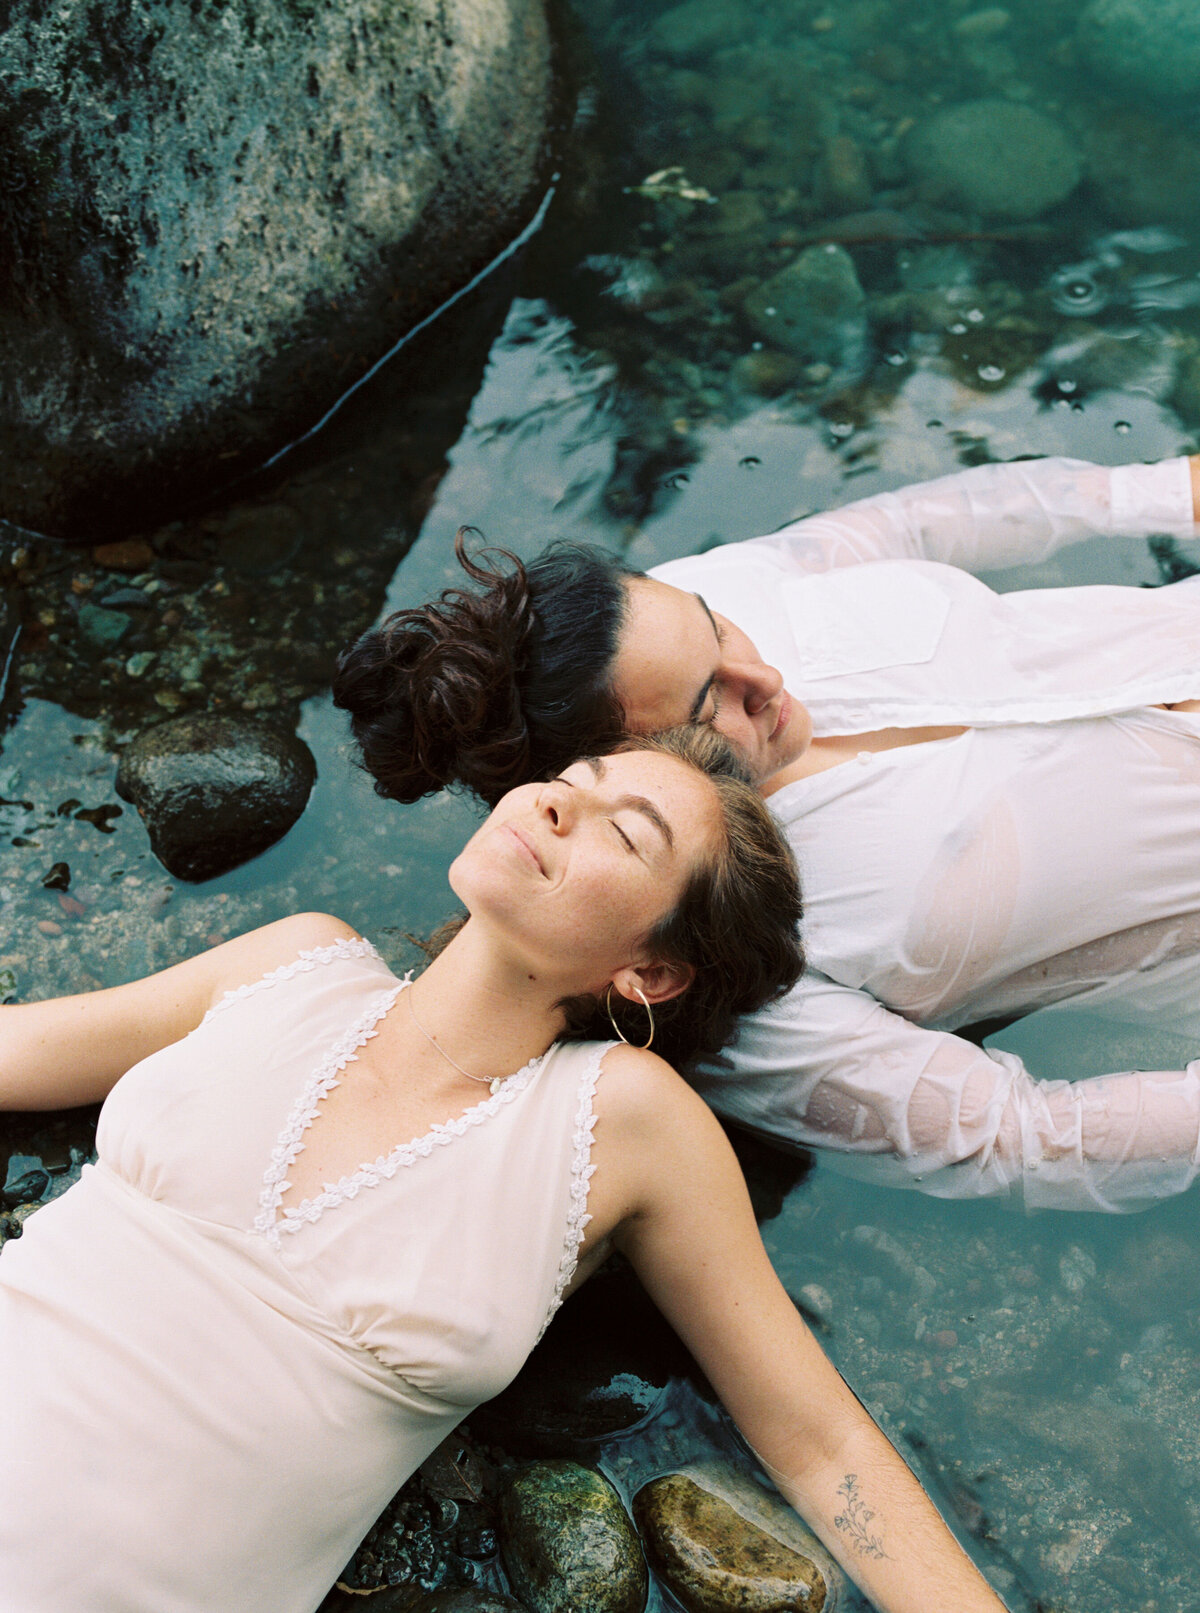 Syd+Kris-Squamish-Couples-Photoshoot-04 (1)